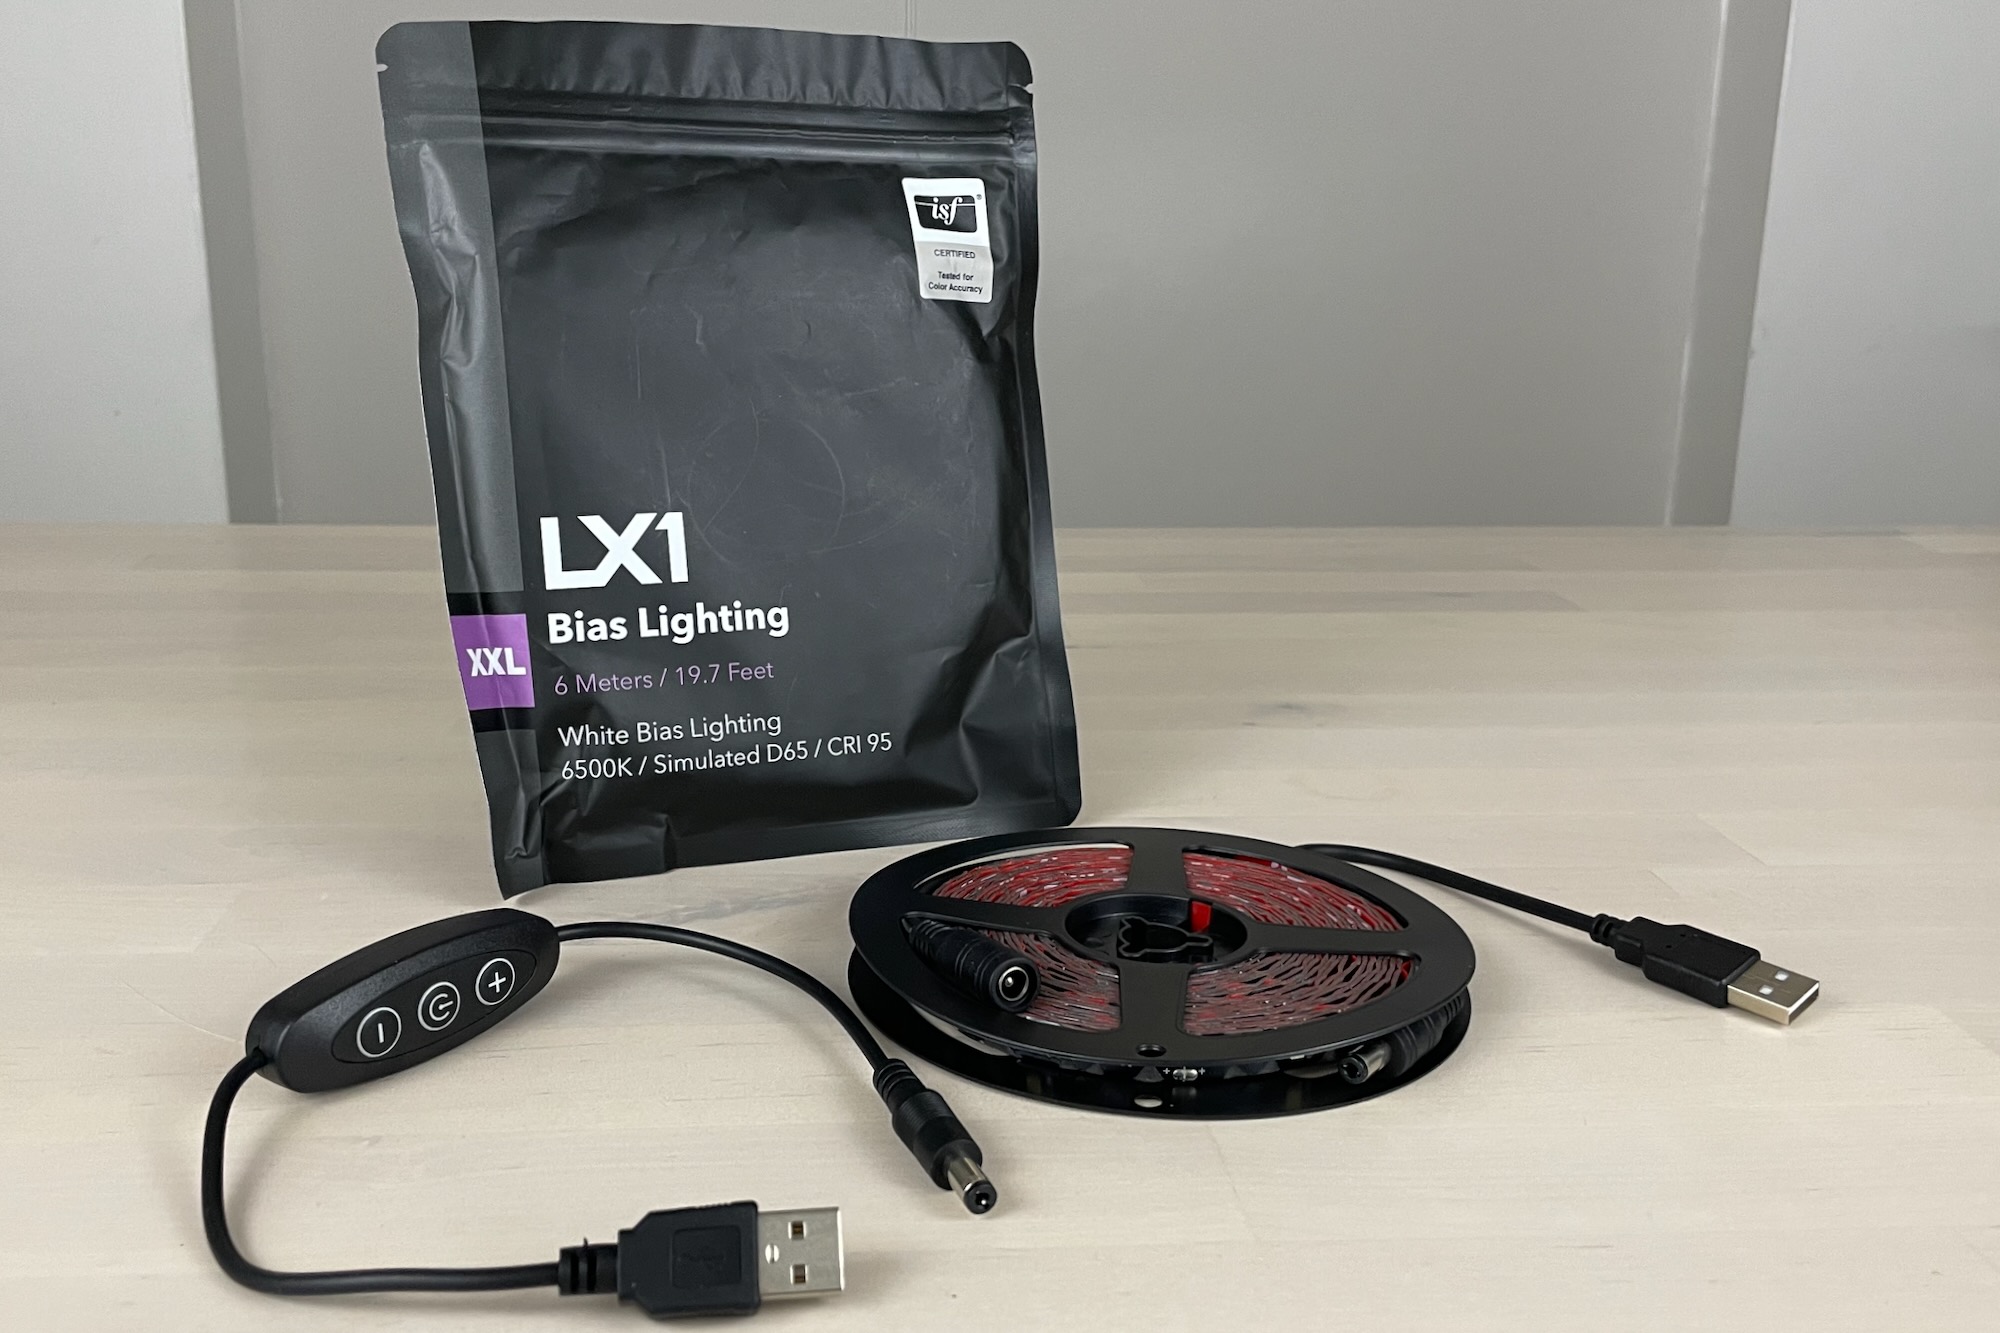 Scenic Labs LX1 Bias Lighting -- Best TV bias lighting for most people